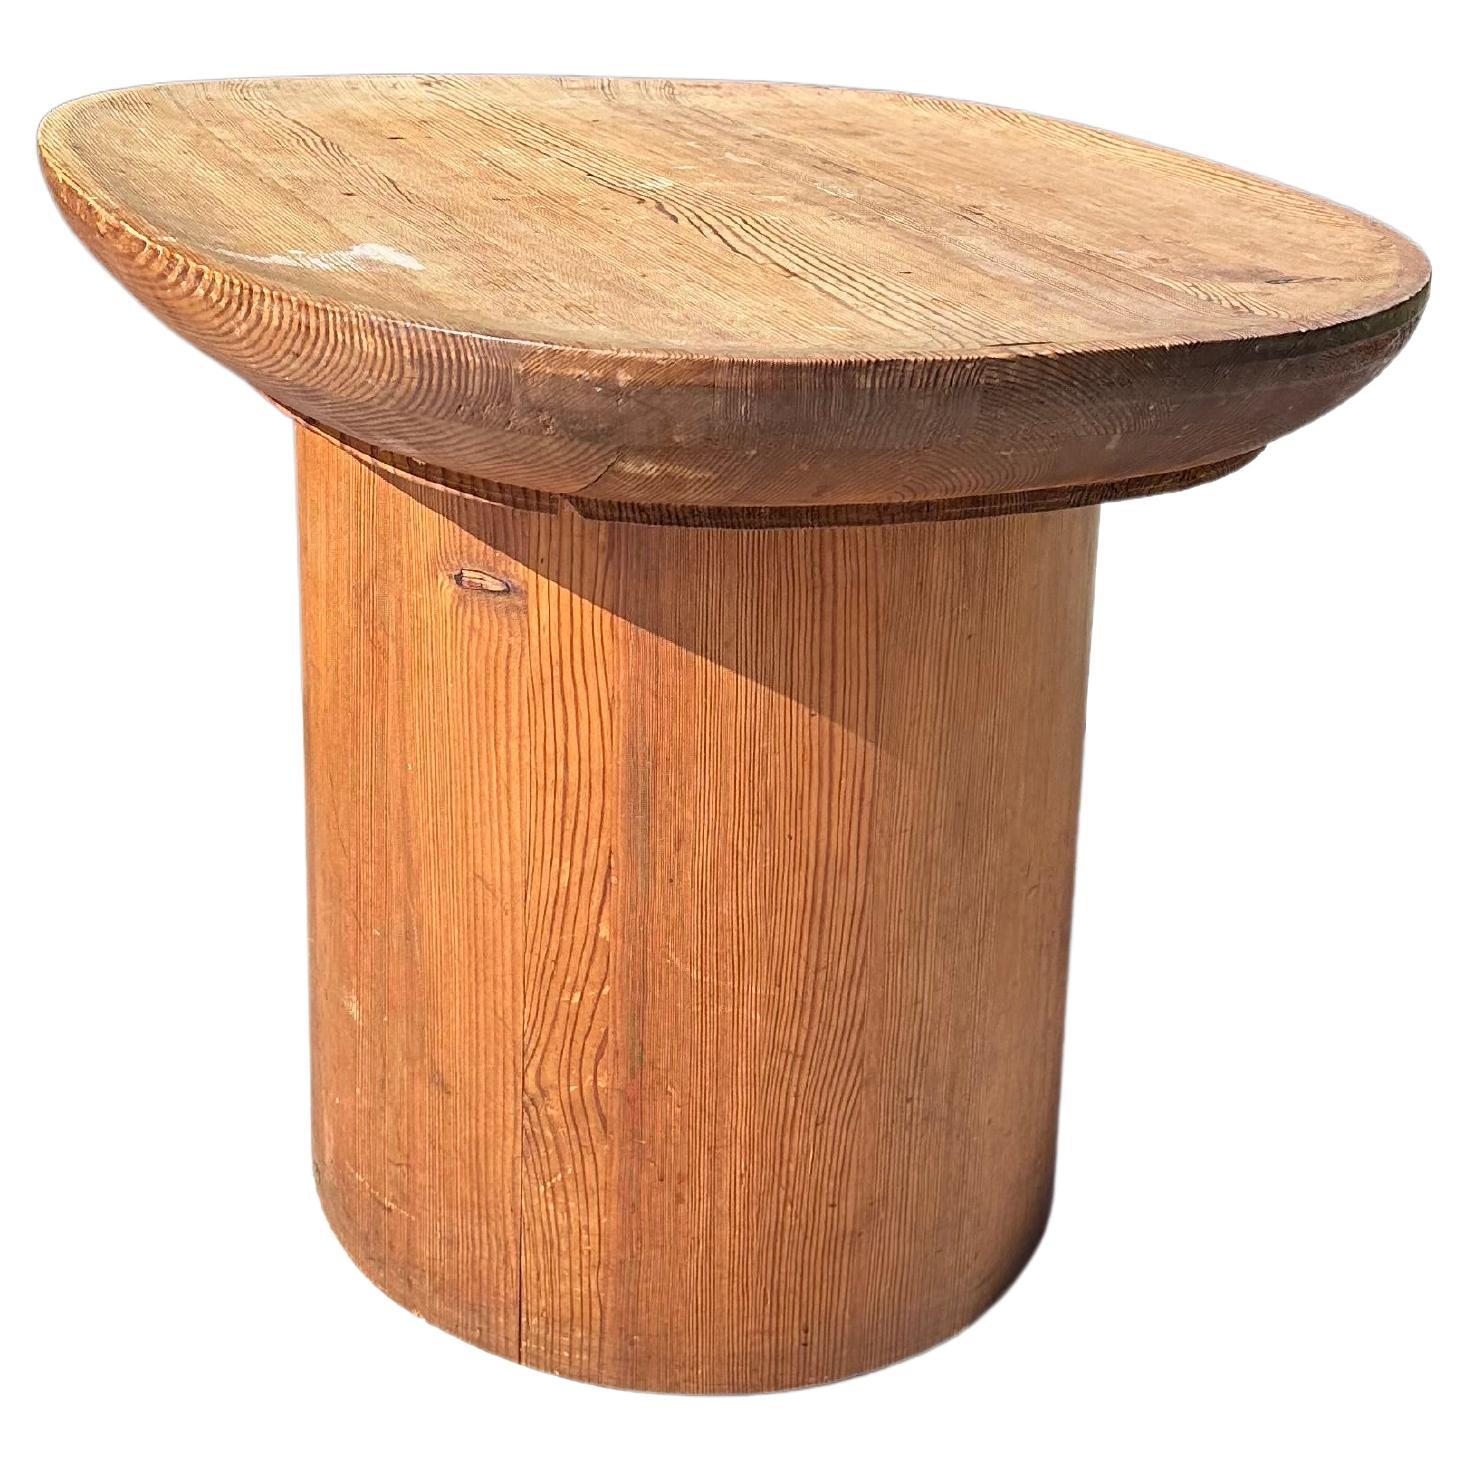 Axel Einar Hjorth Uto Table For Sale